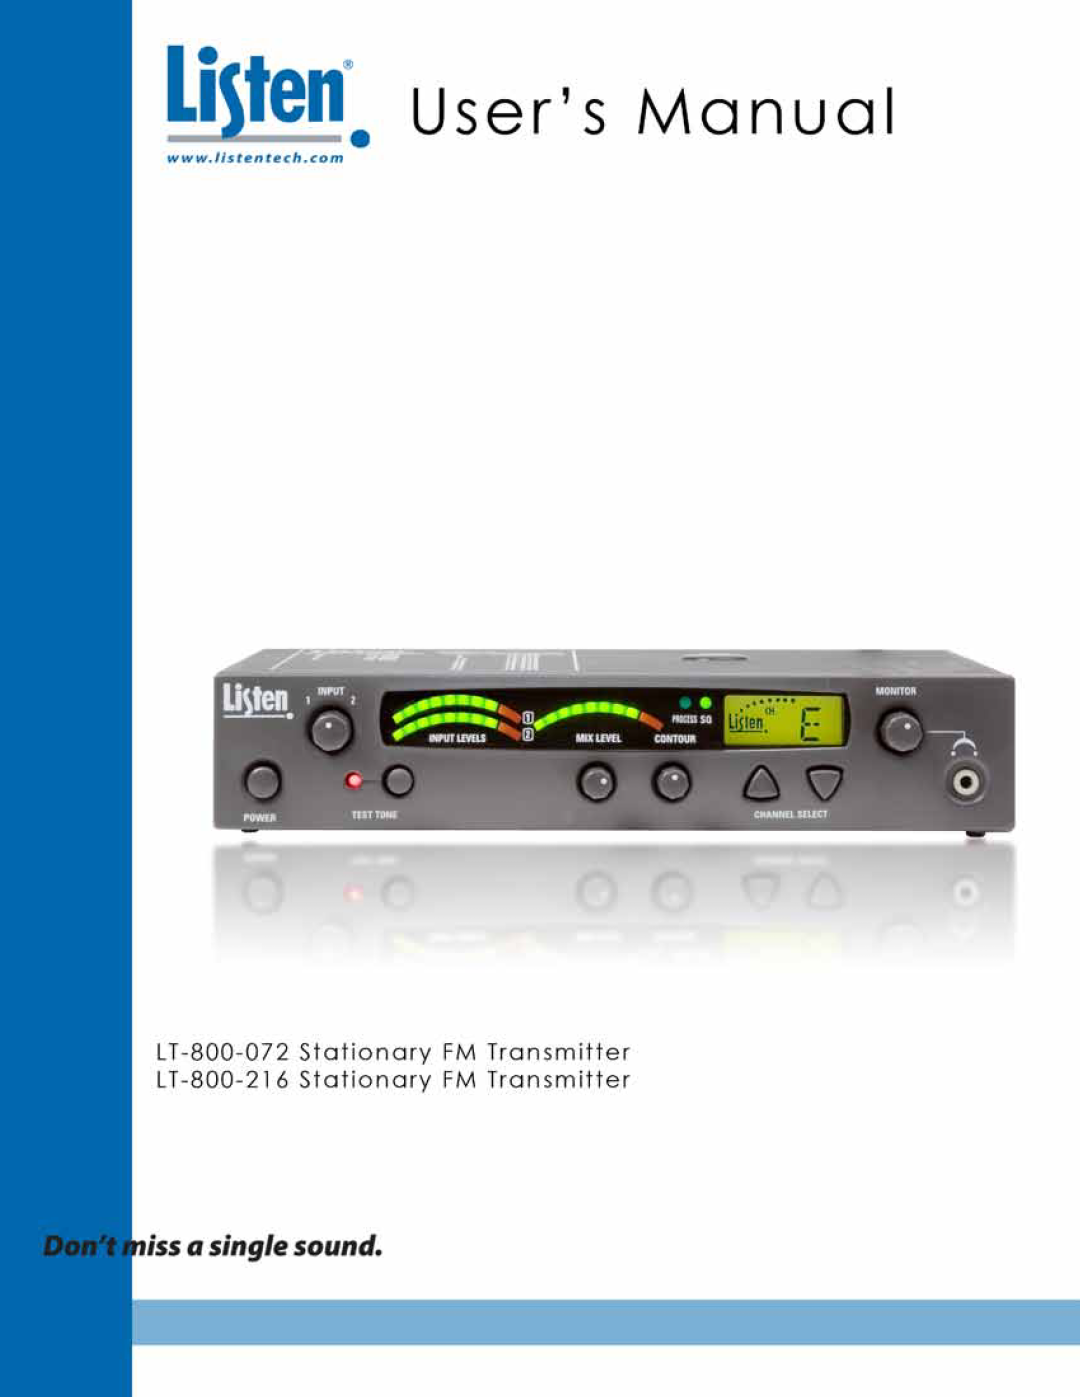 Listen Technologies LT-800-072, LT-800-216 manual 